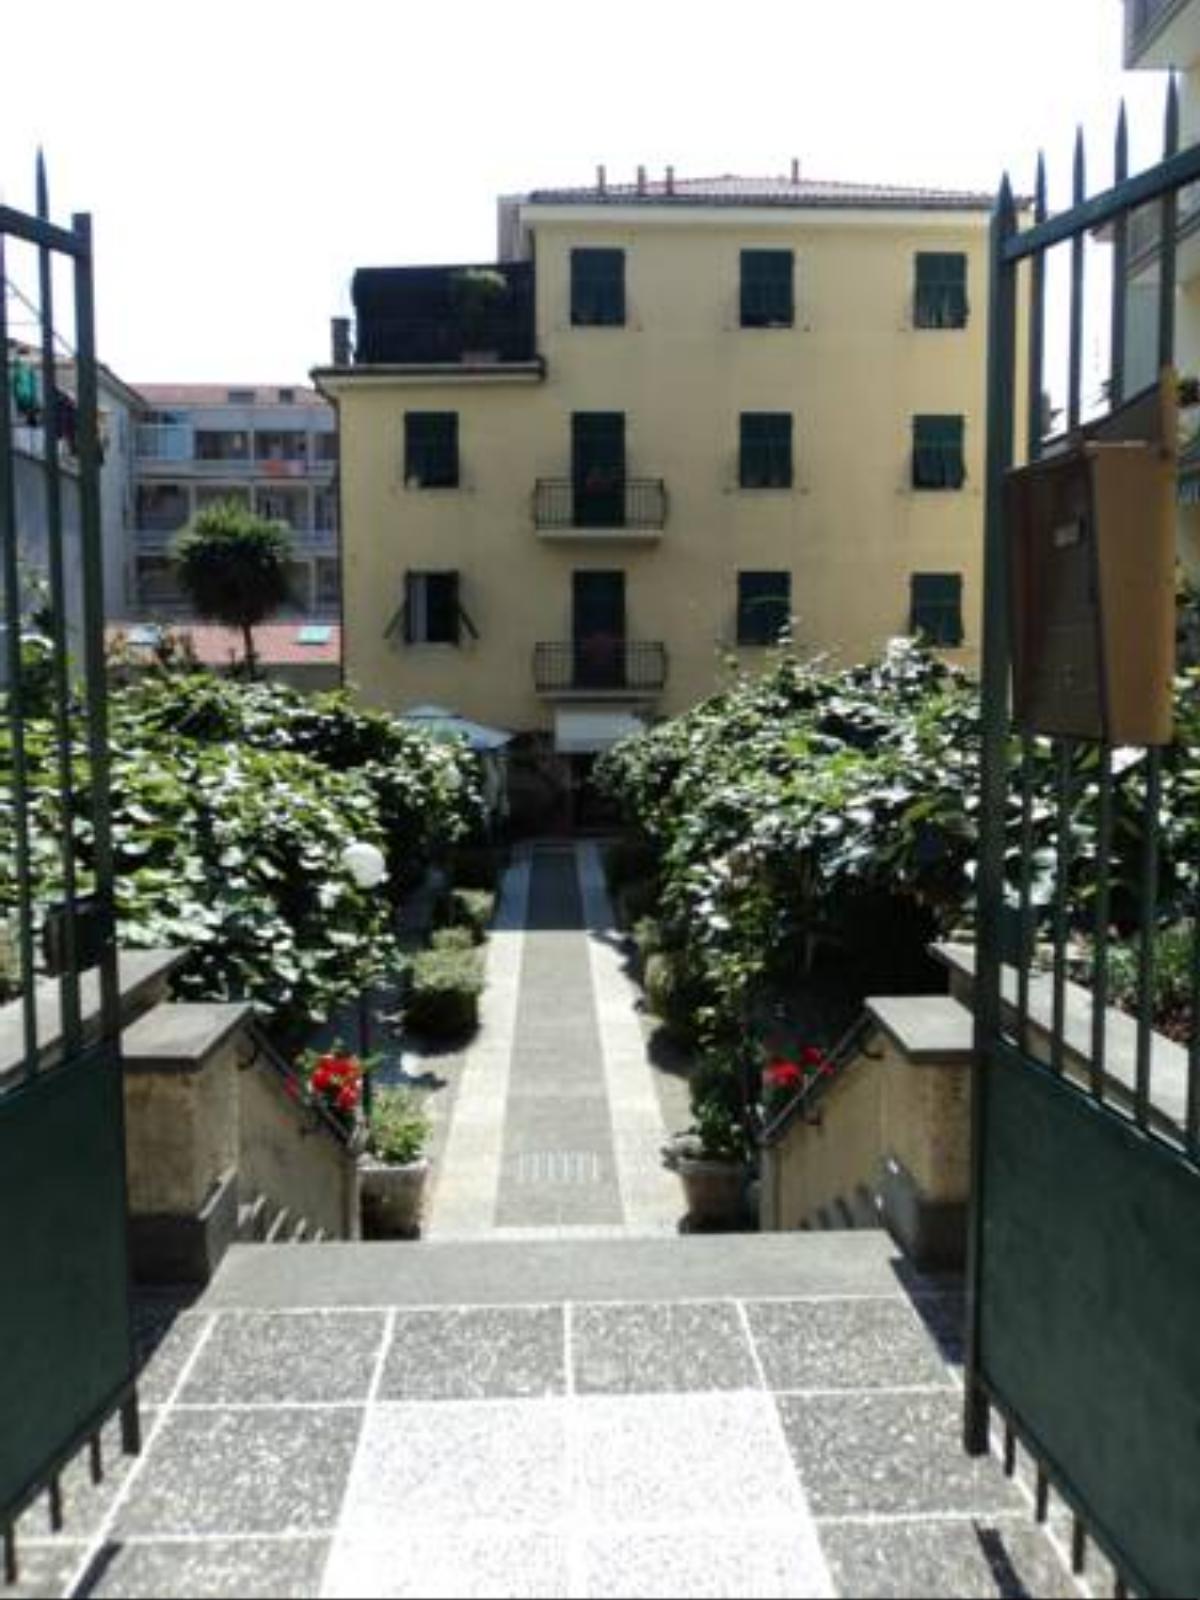 Hotel Alba Hotel Lavagna Italy